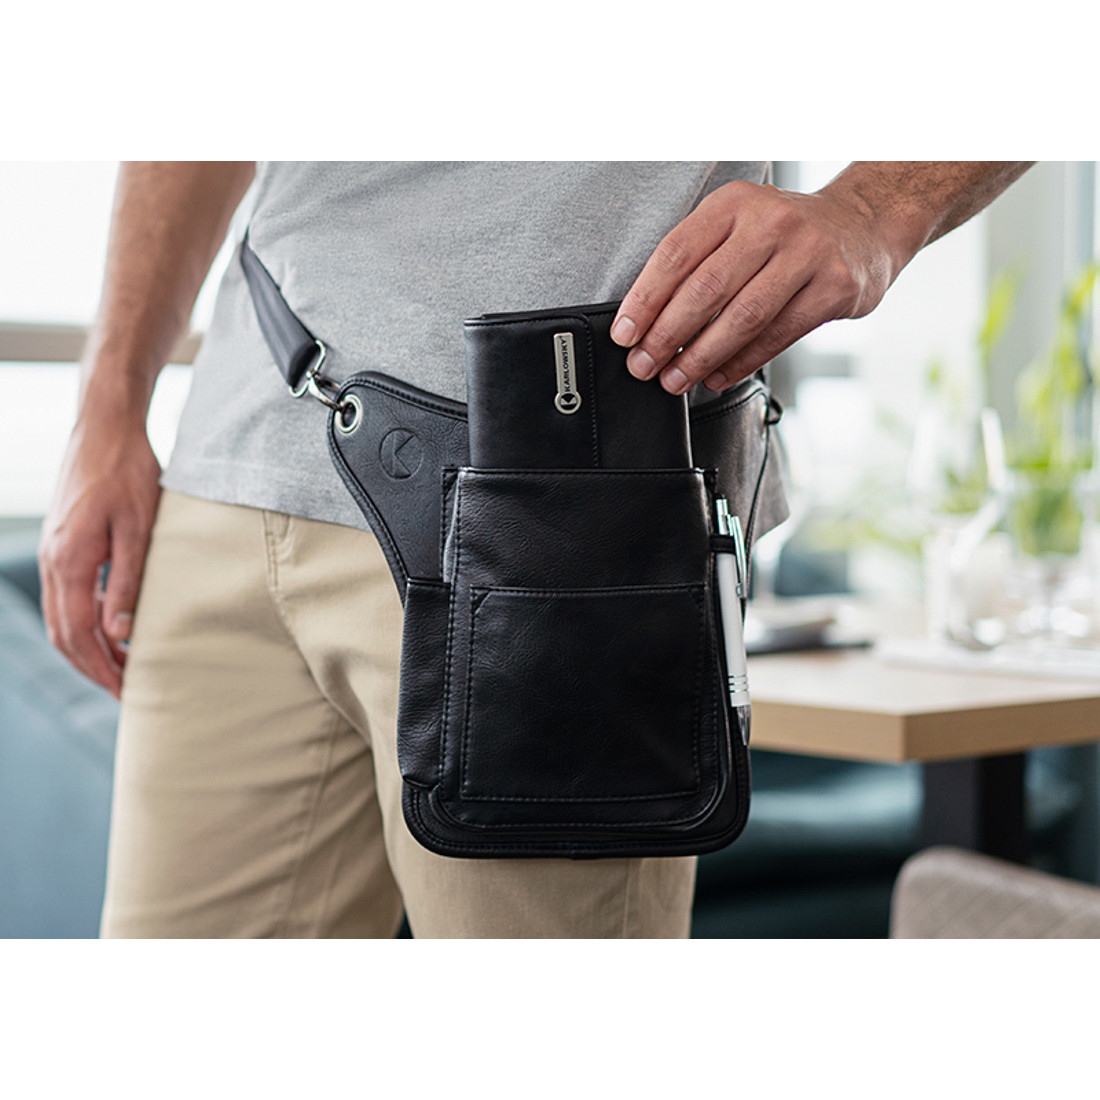 Zapatilla extra-large para camarero con arnés integrado para cinturón - Ropa de protección